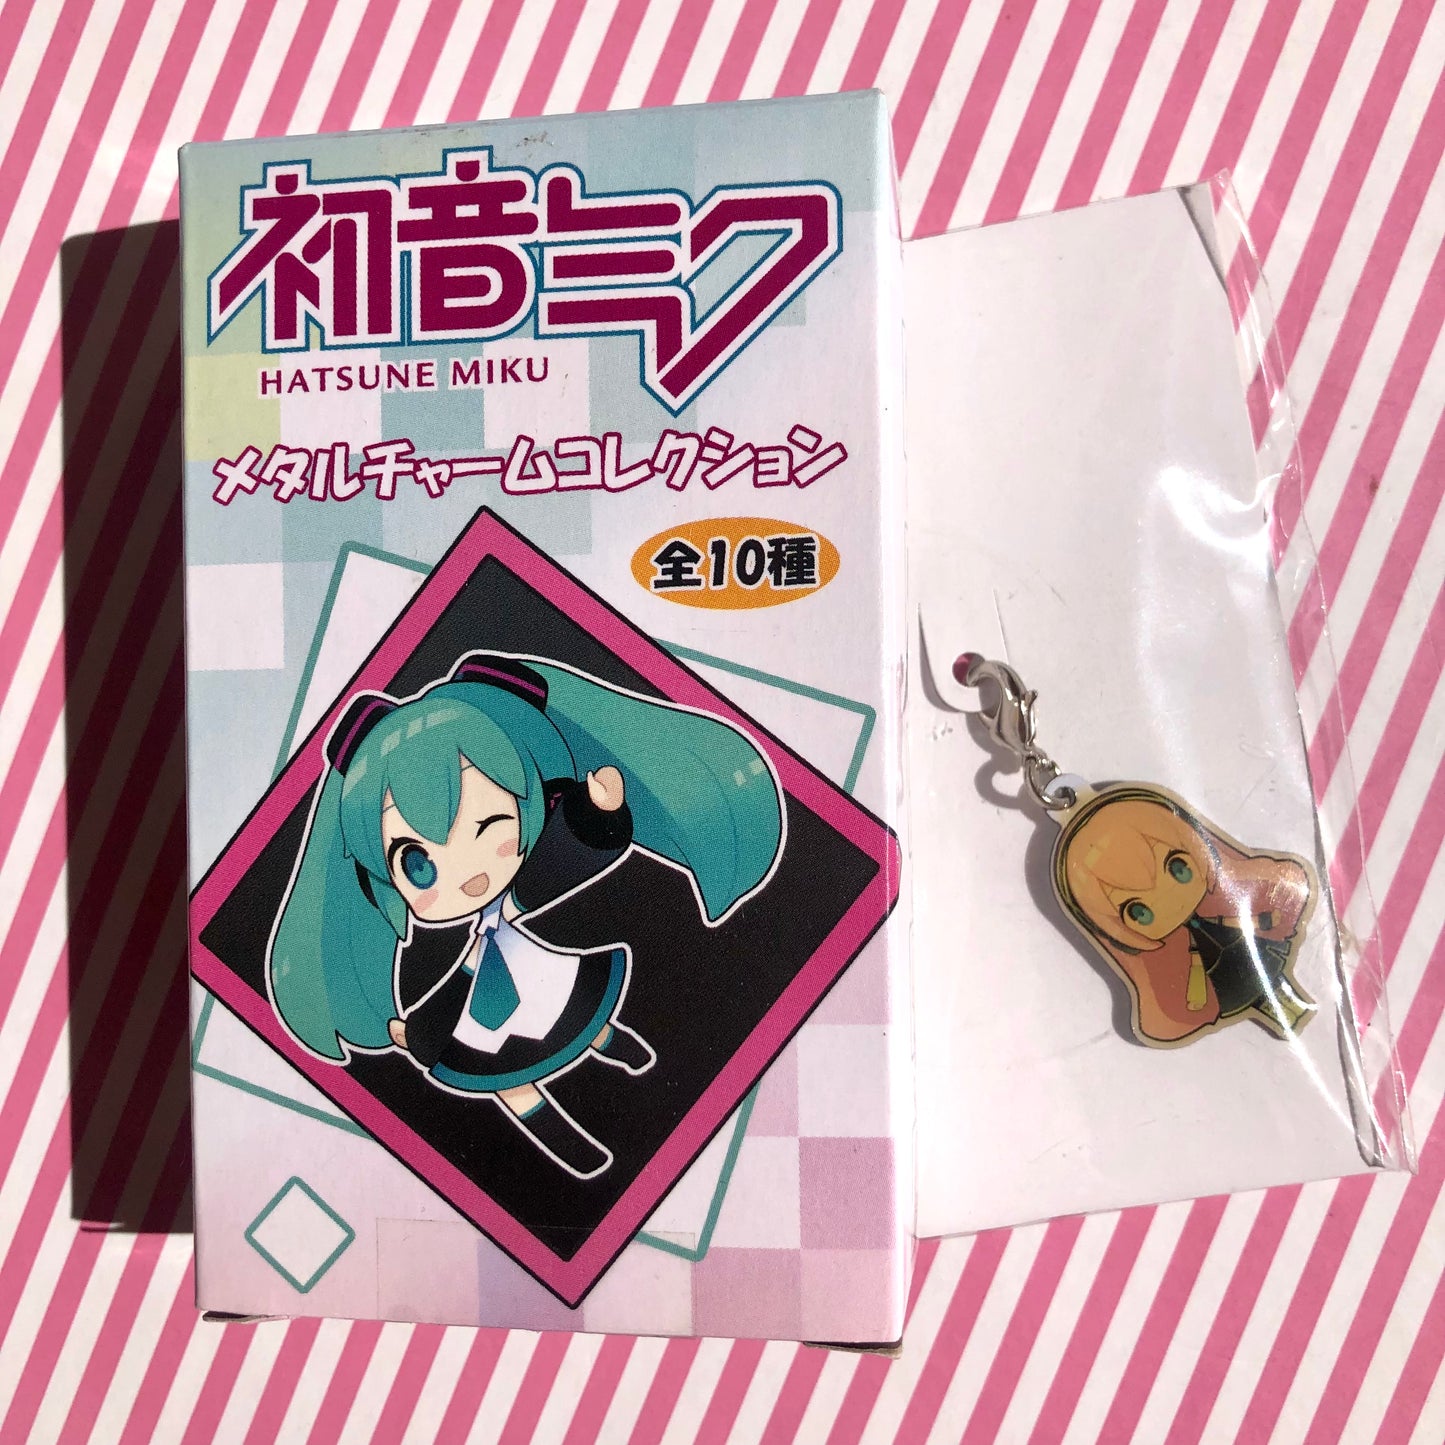 Porte-clés acrylique original Vocaloid Hatsune Miku - Megurine Luka